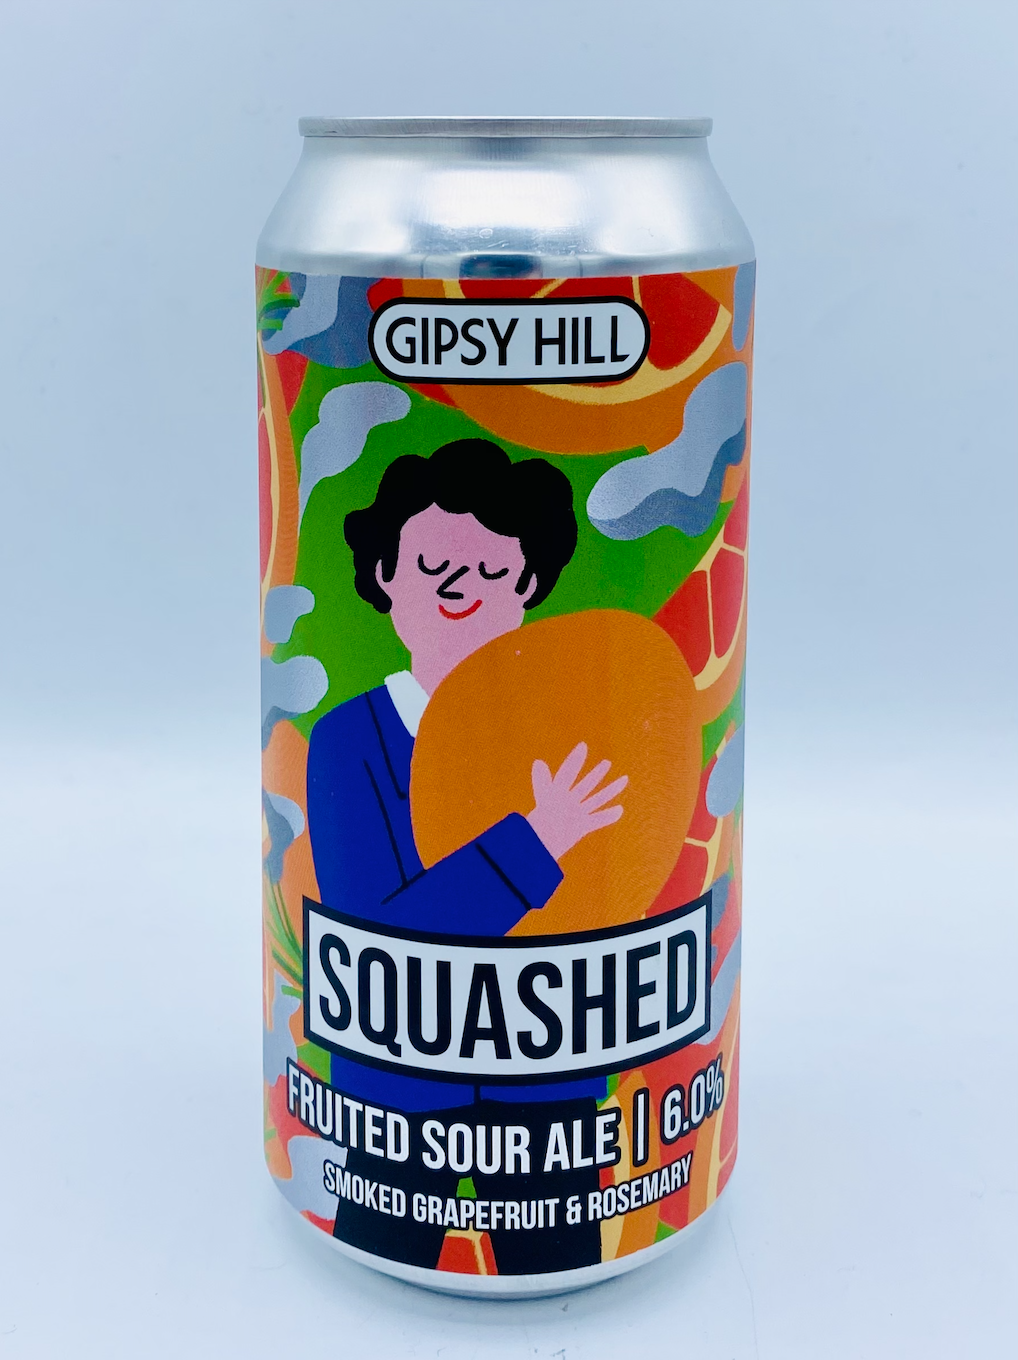 Gipsy Hill - Squashed | Smoked Grapefruit & Rosemary 6%